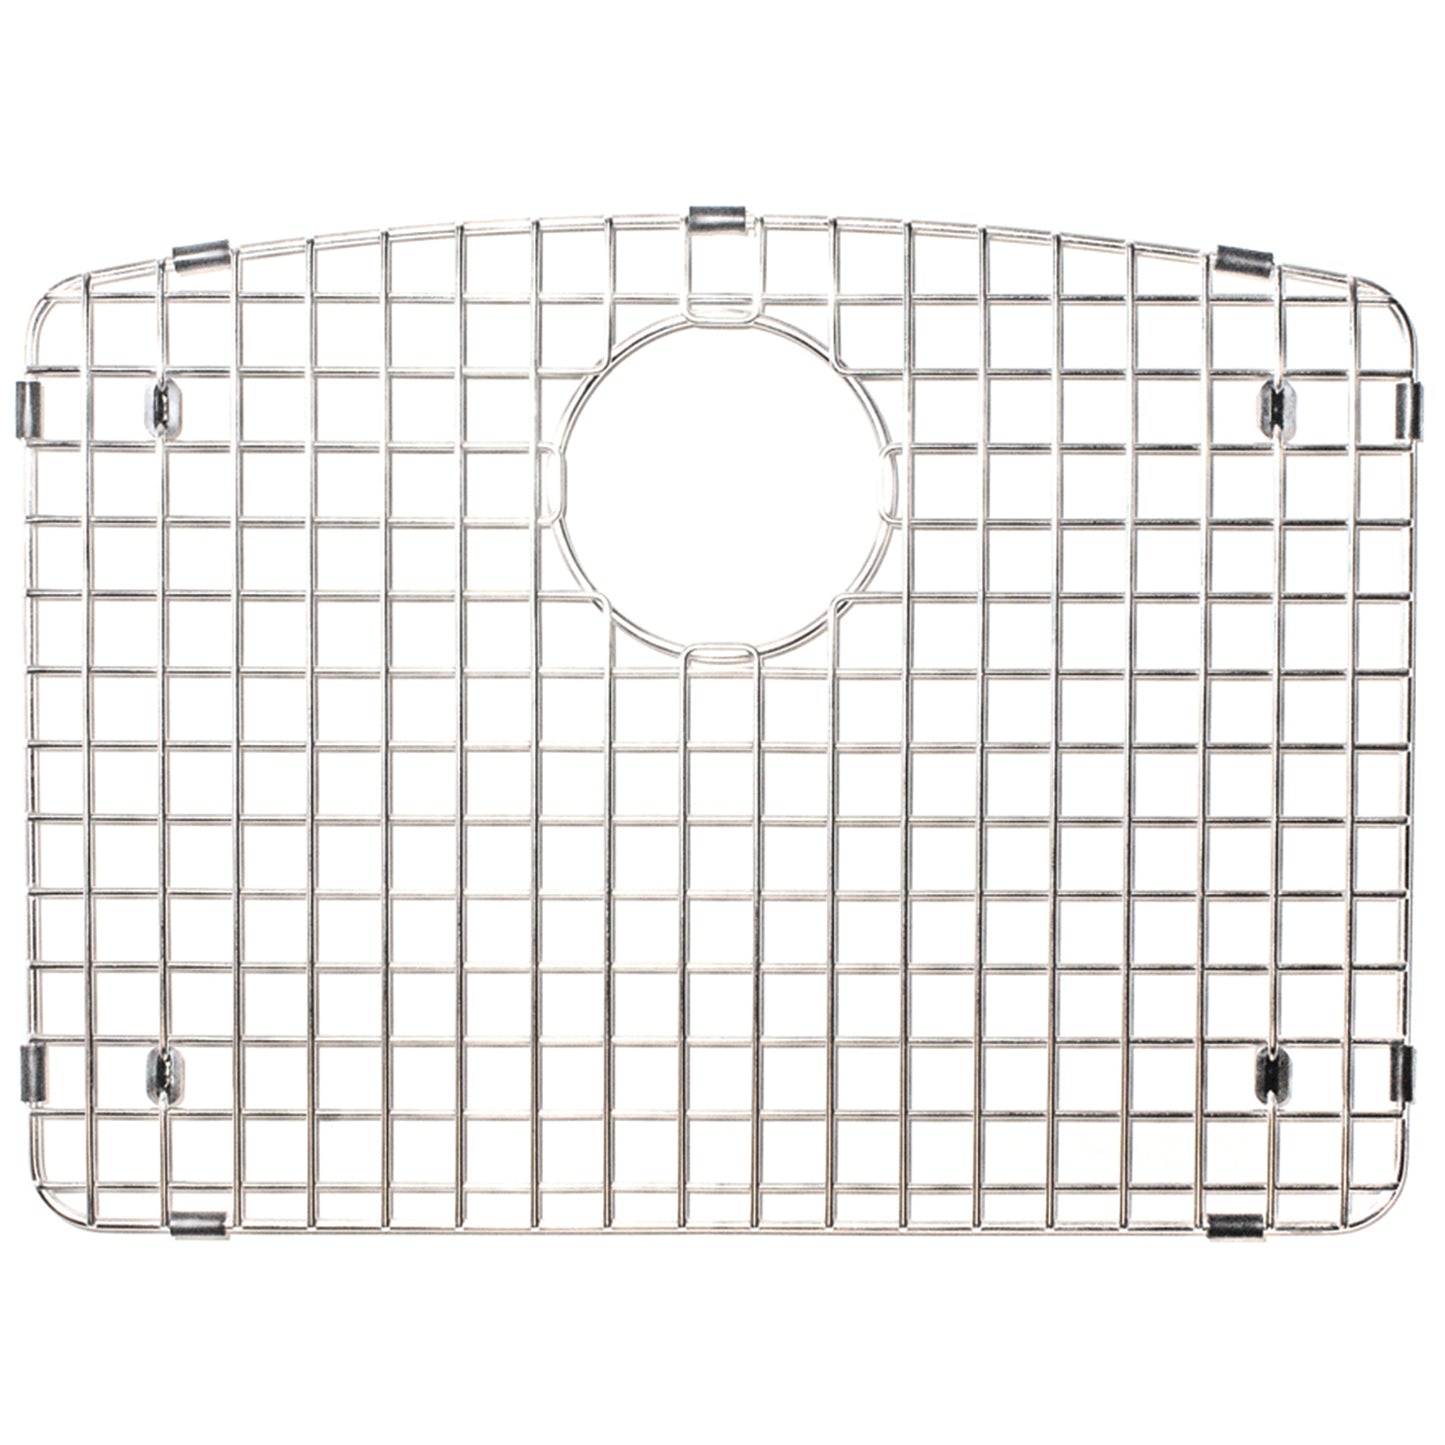 FRANKE FBGG1914 18.8-in. x 13.8-in. Stainless Steel Bottom Sink Grid for Select Ellipse Granite Sinks In Stainless Steel